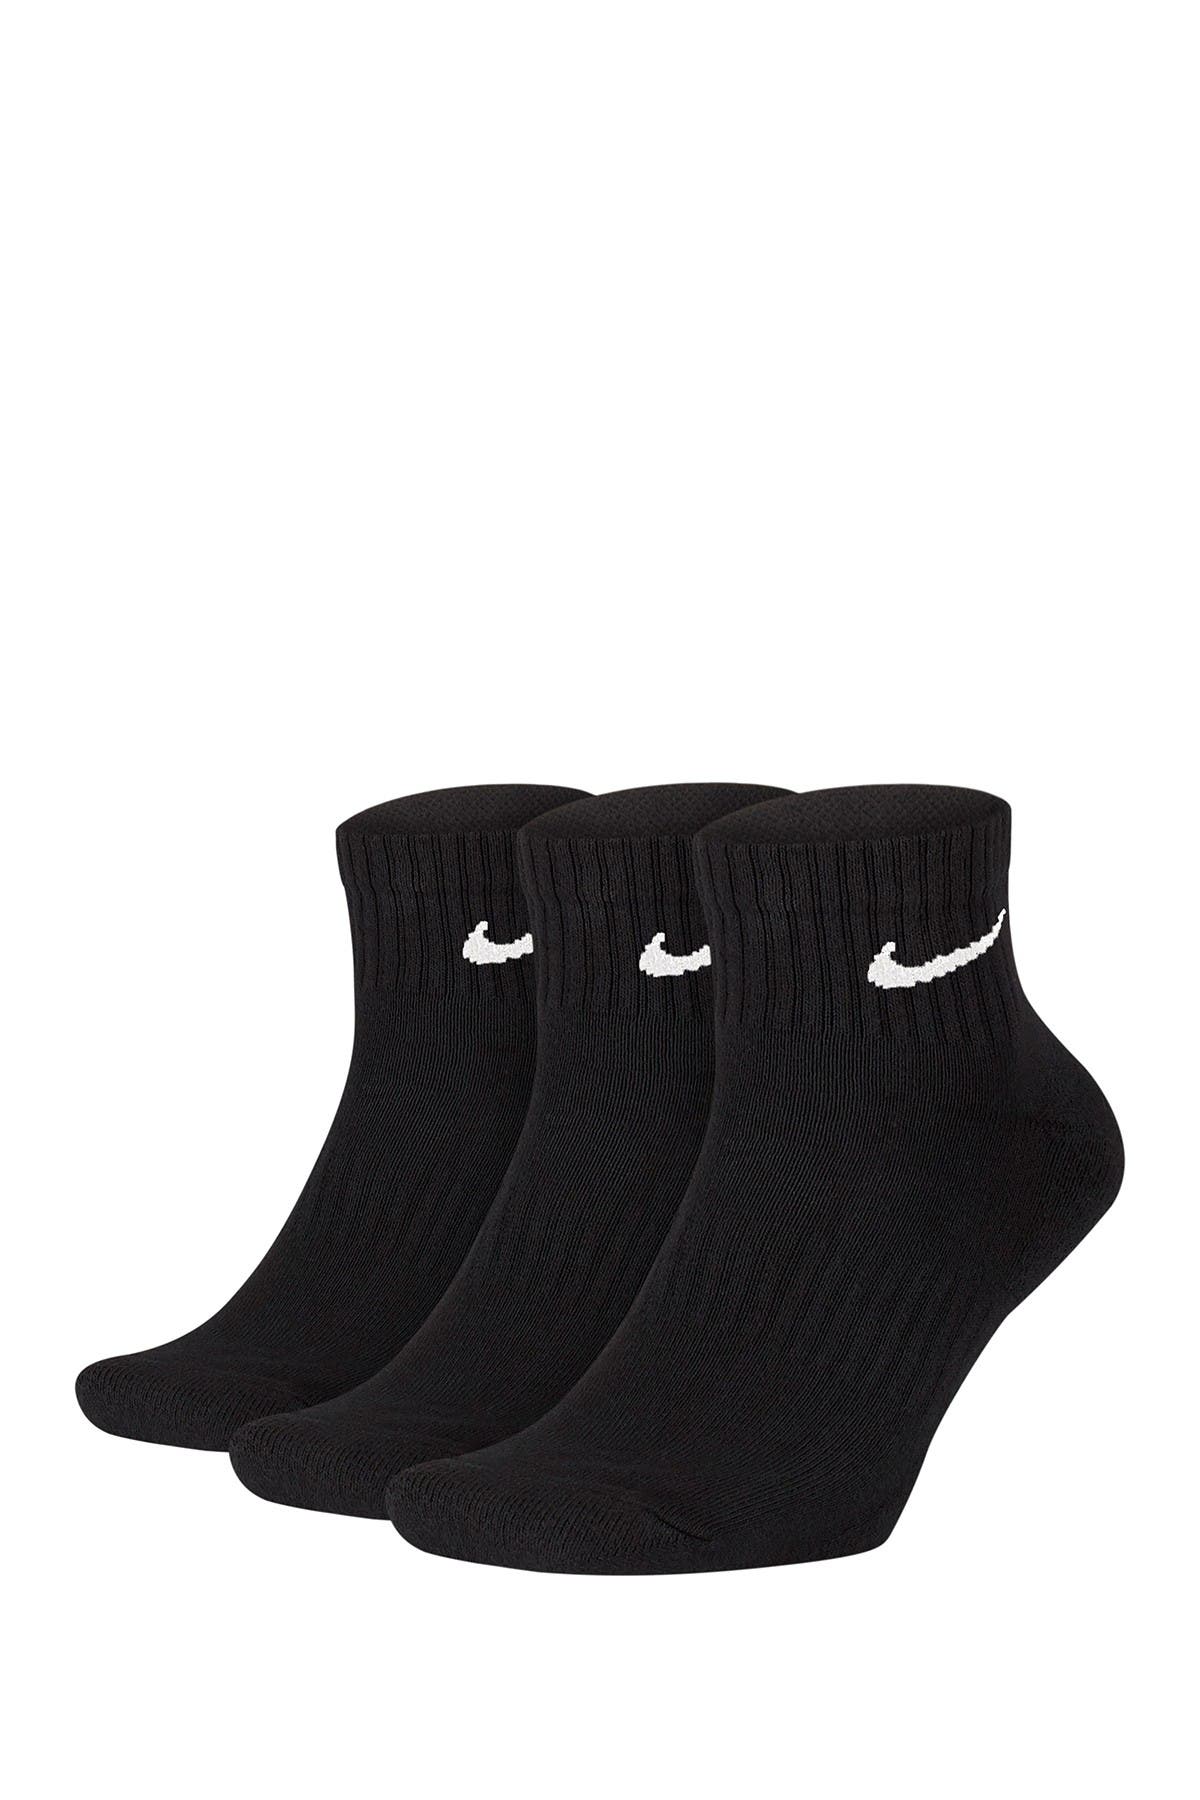 black nike ankle socks